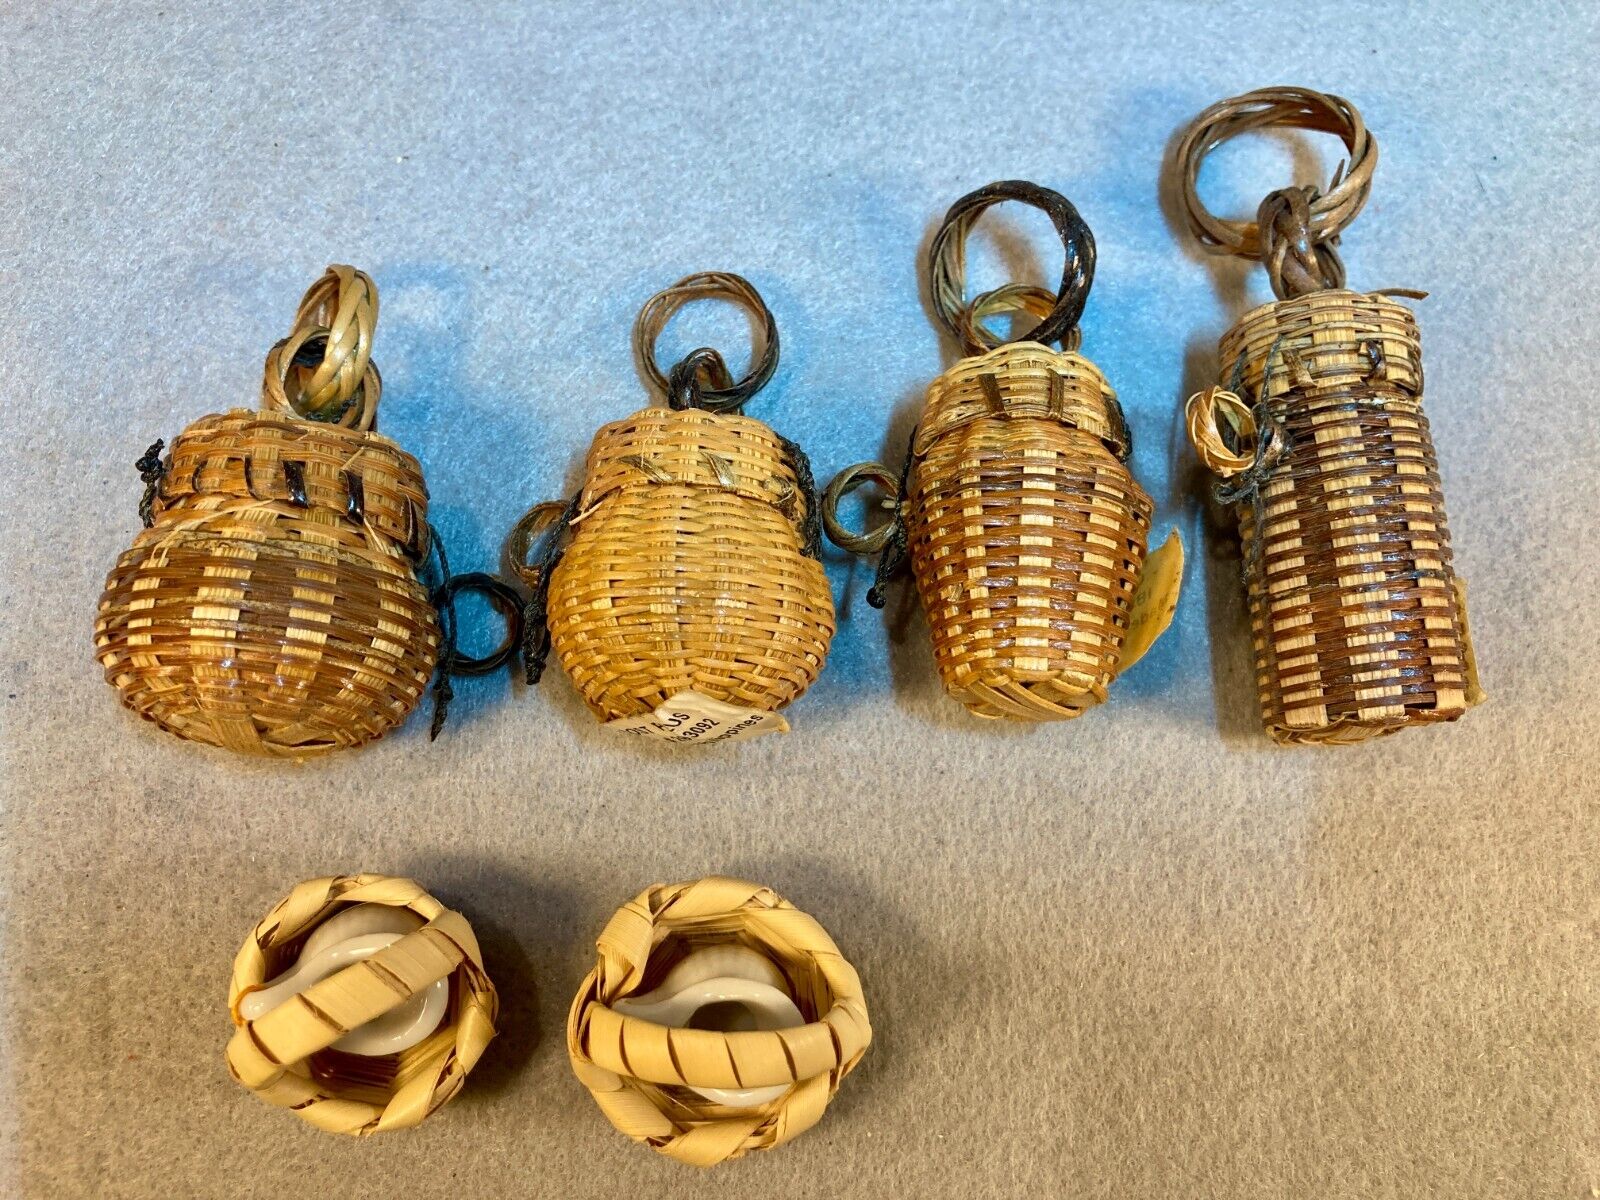 Vintage Dollhouse Miniature lot of 6 woven baskets & 2 glass pitchers